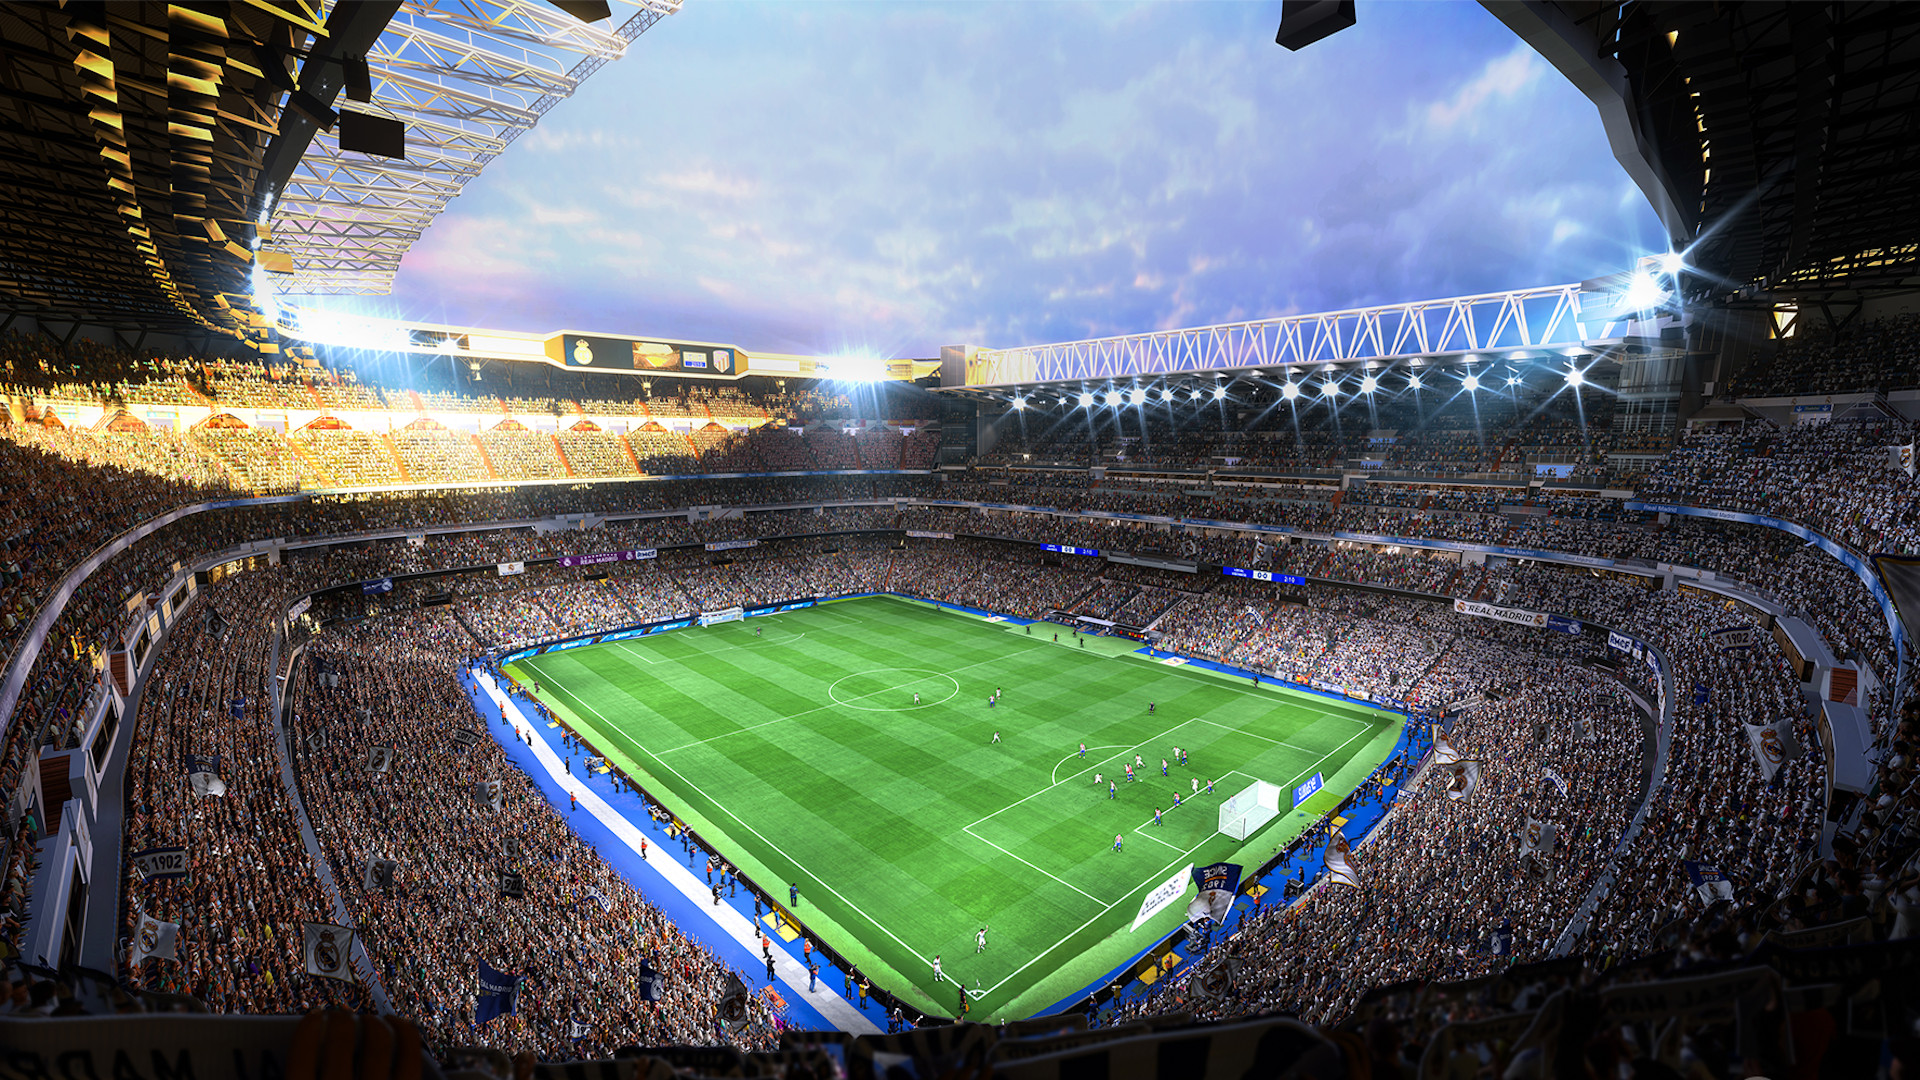 FIFA 22 release date: A fan-packed stadium.